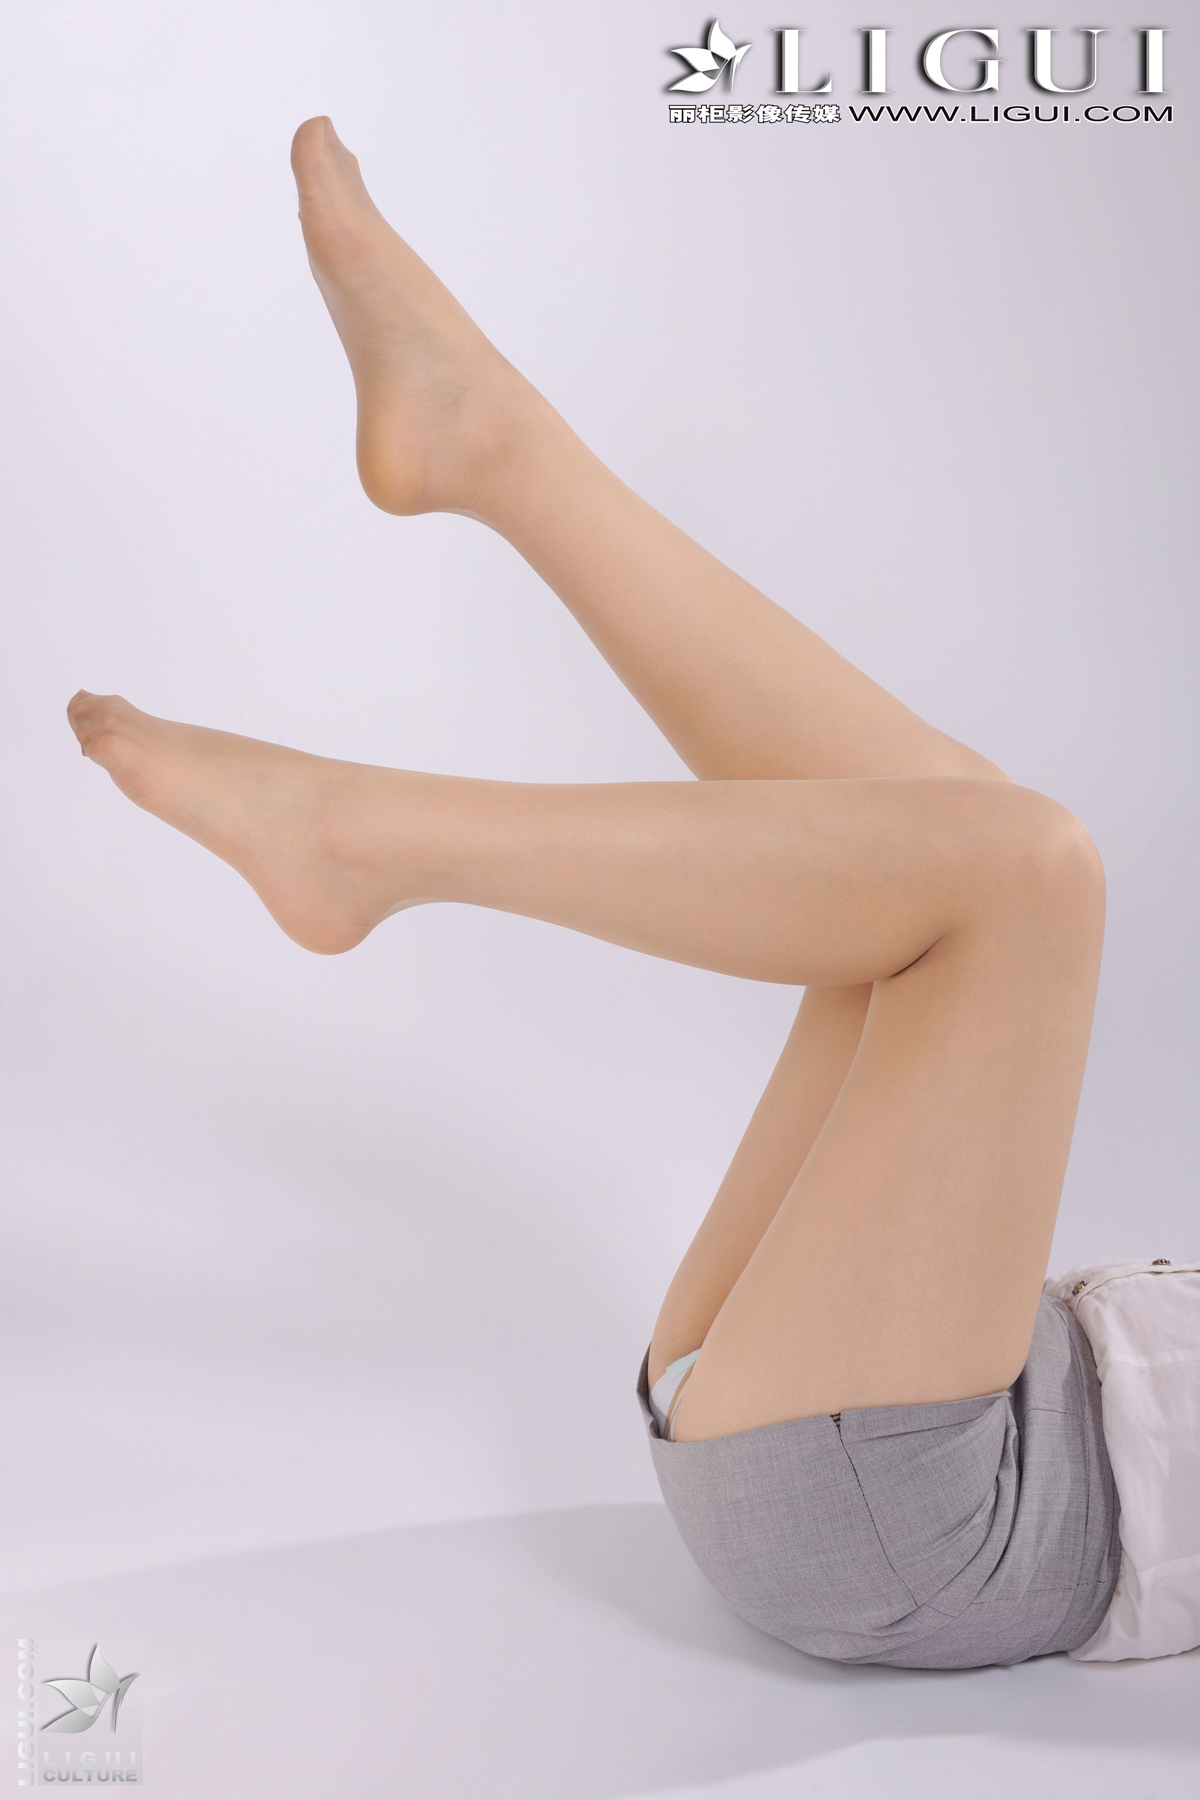 Model文靜 女教師的絲襪誘惑[LIGUI] 丽贵套图[06-10]